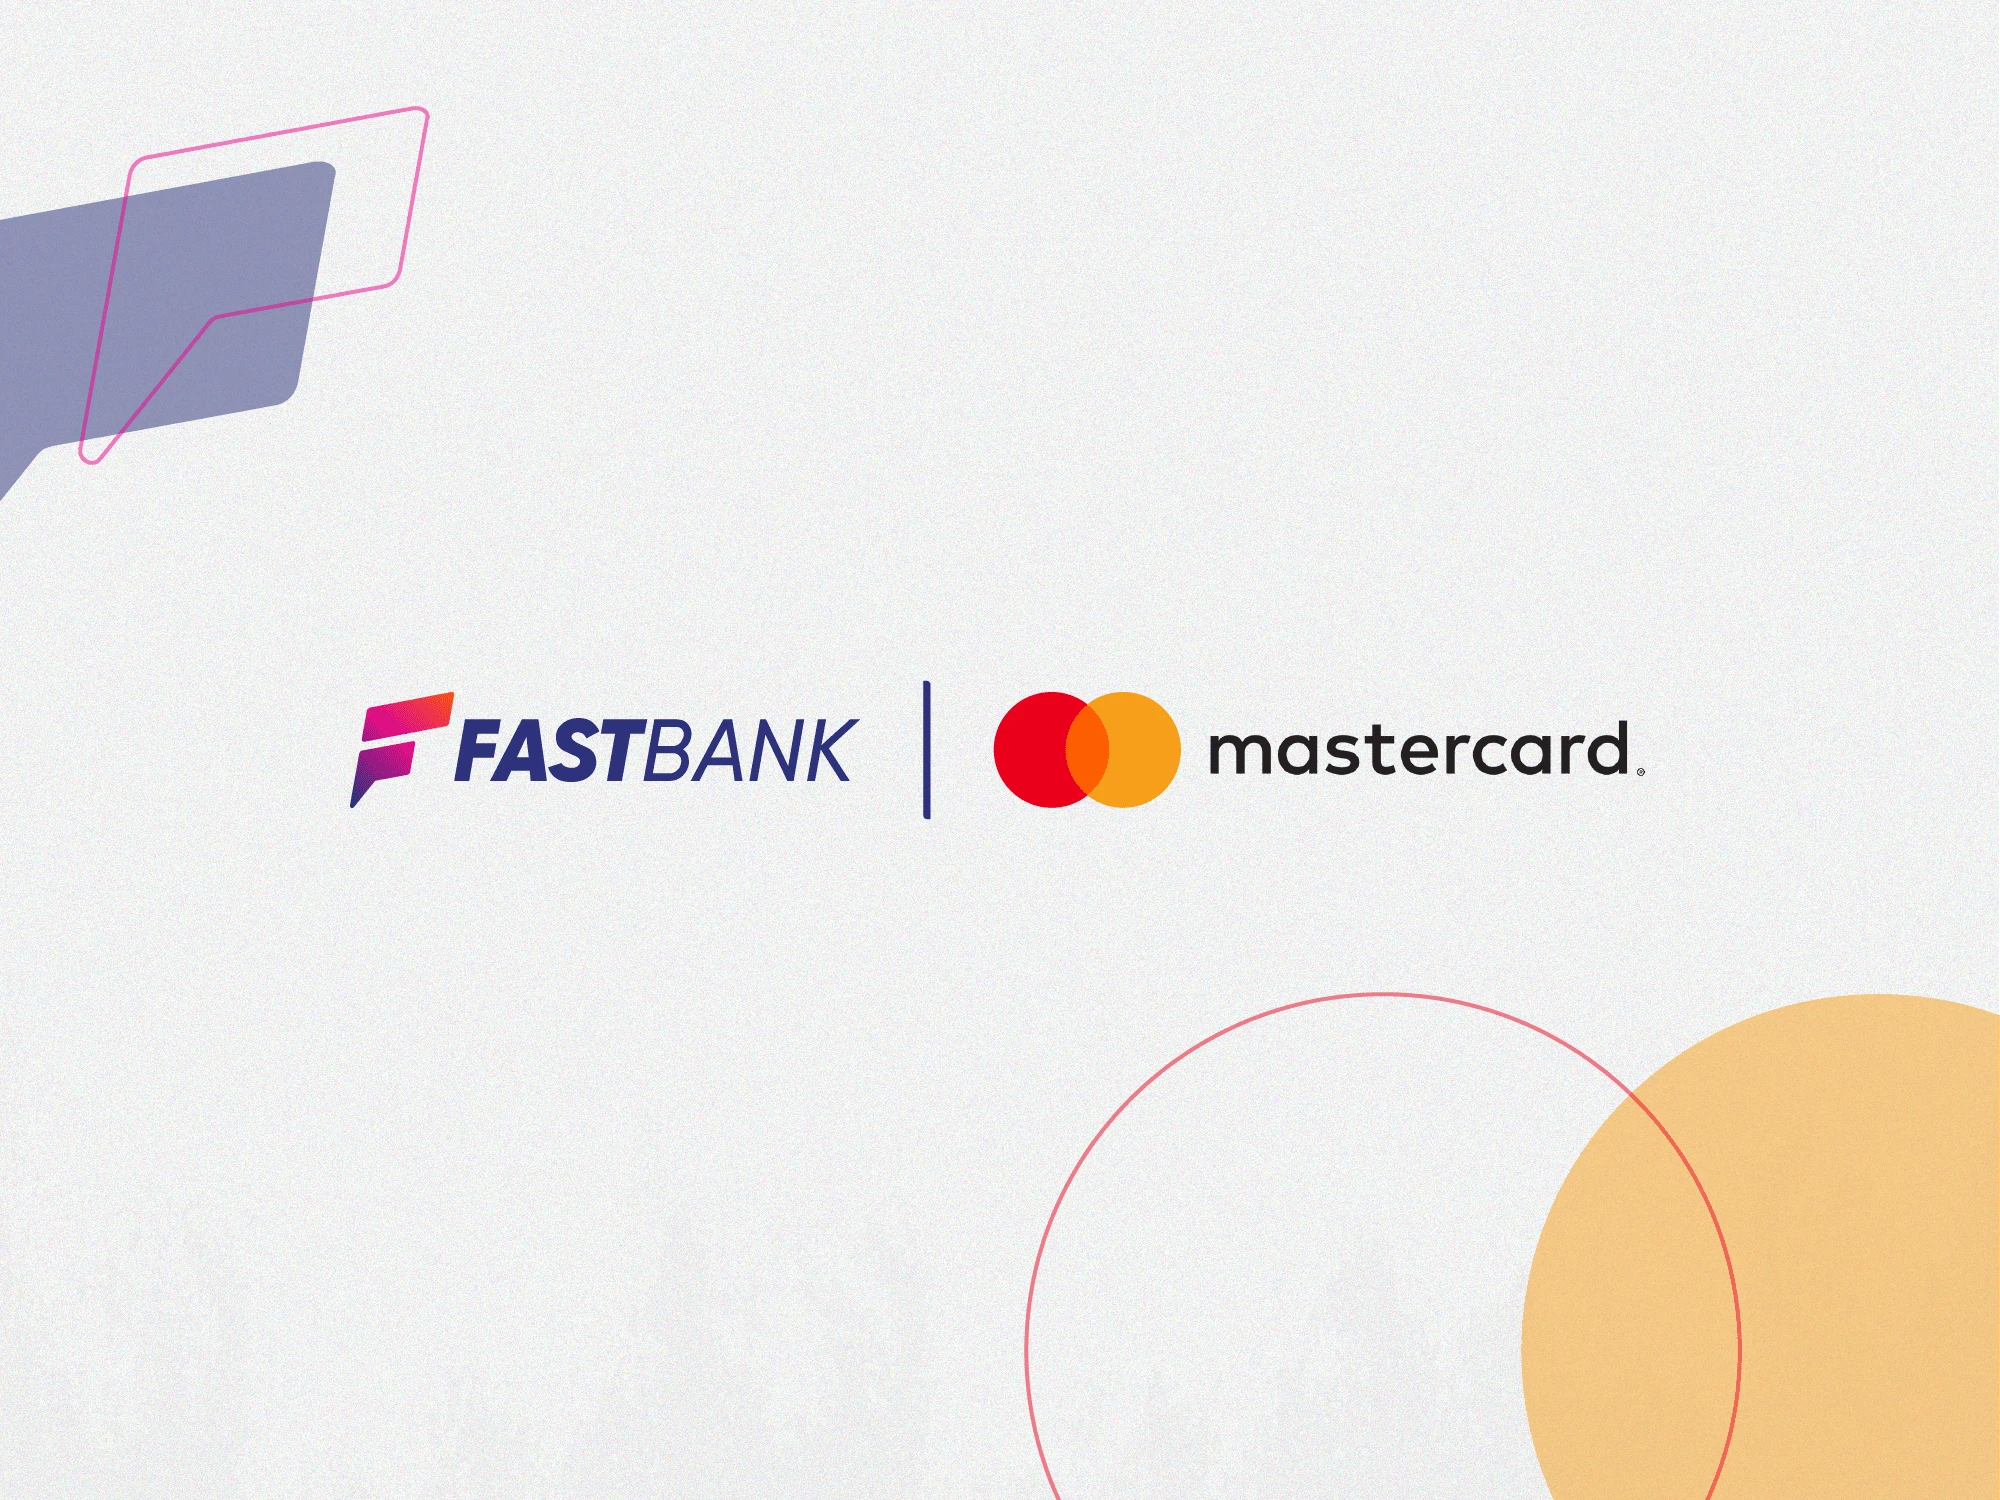 Fast Bank has received a Mastercard membership license